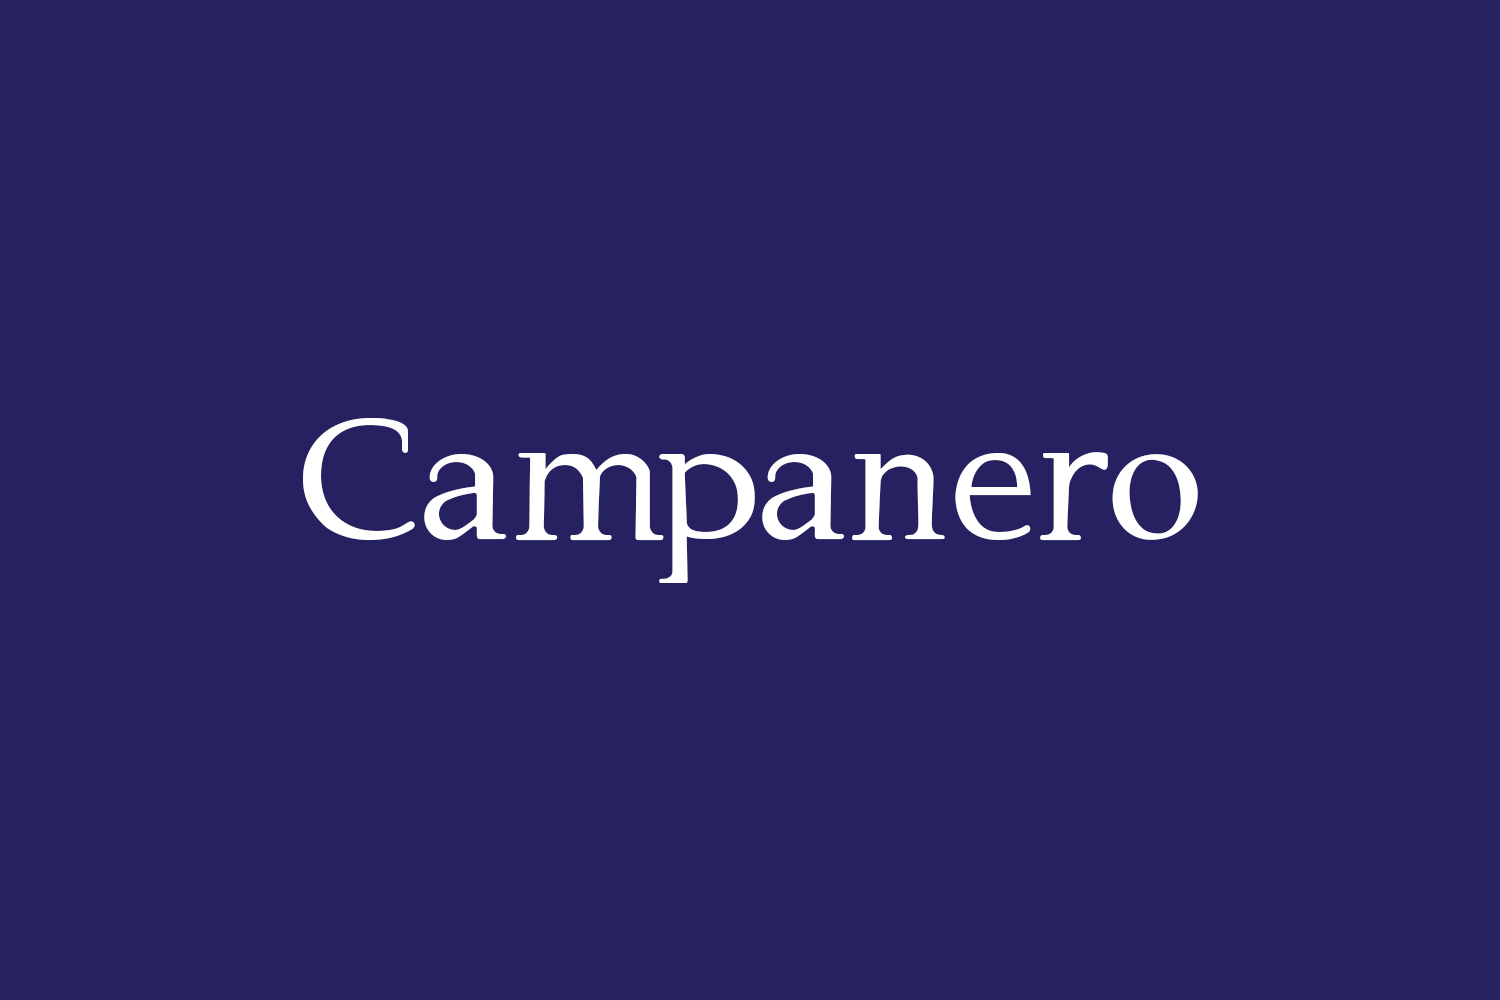 Campanero Free Font